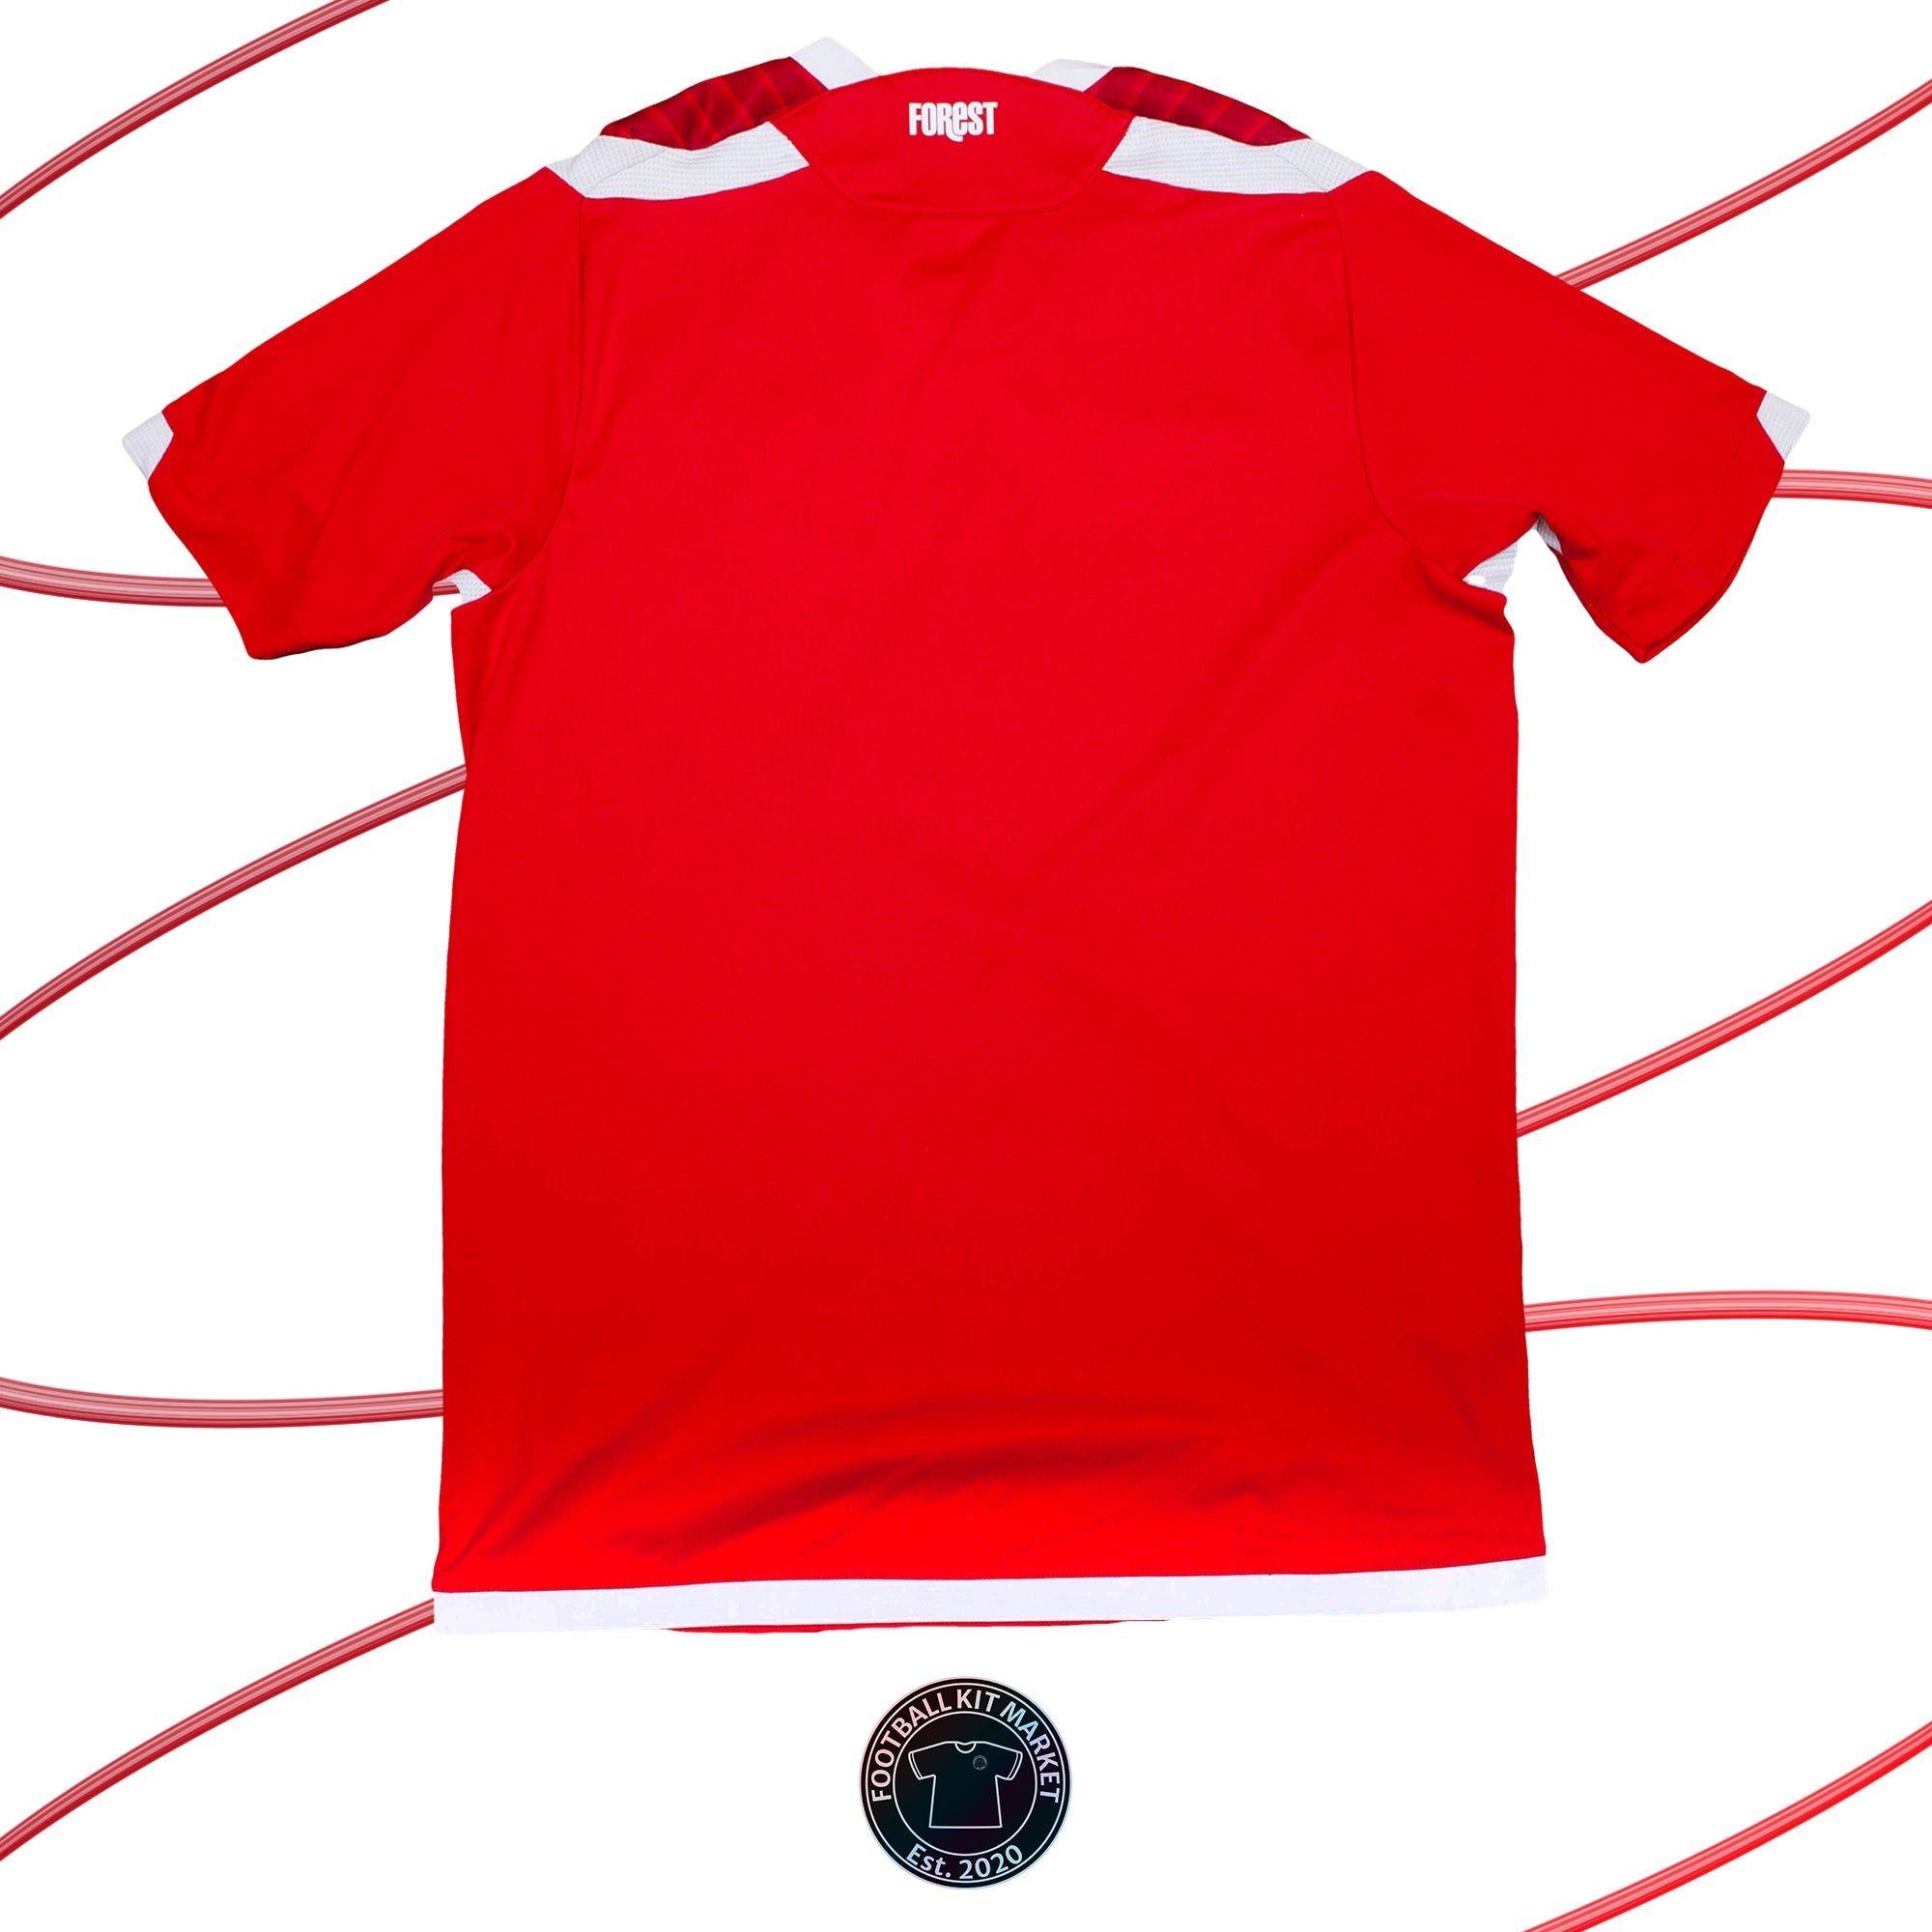 Genuine NOTTINGHAM FOREST Home Shirt (2009-2010) - UMBRO (S) - Product Image from Football Kit Market